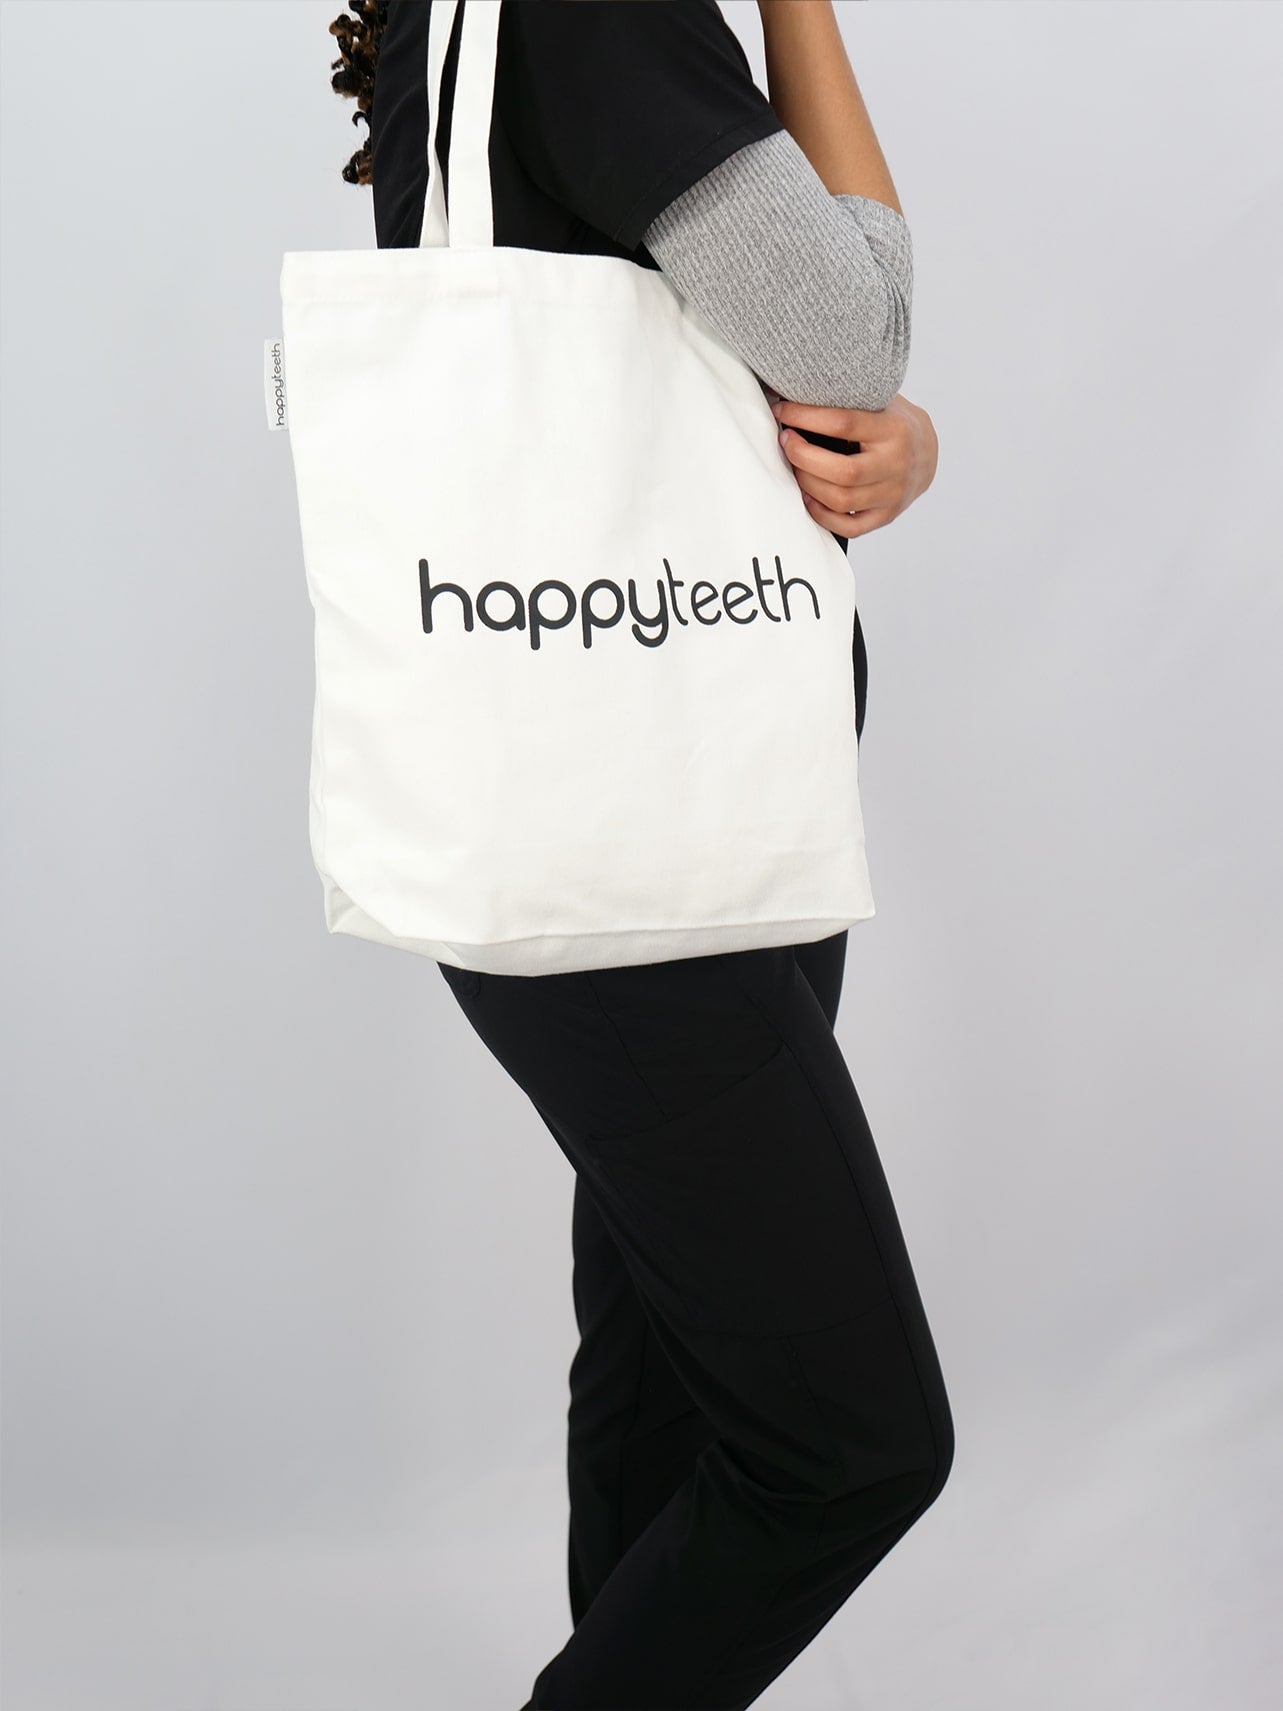 happyteeth® | Premium Bags Made for Healthcare